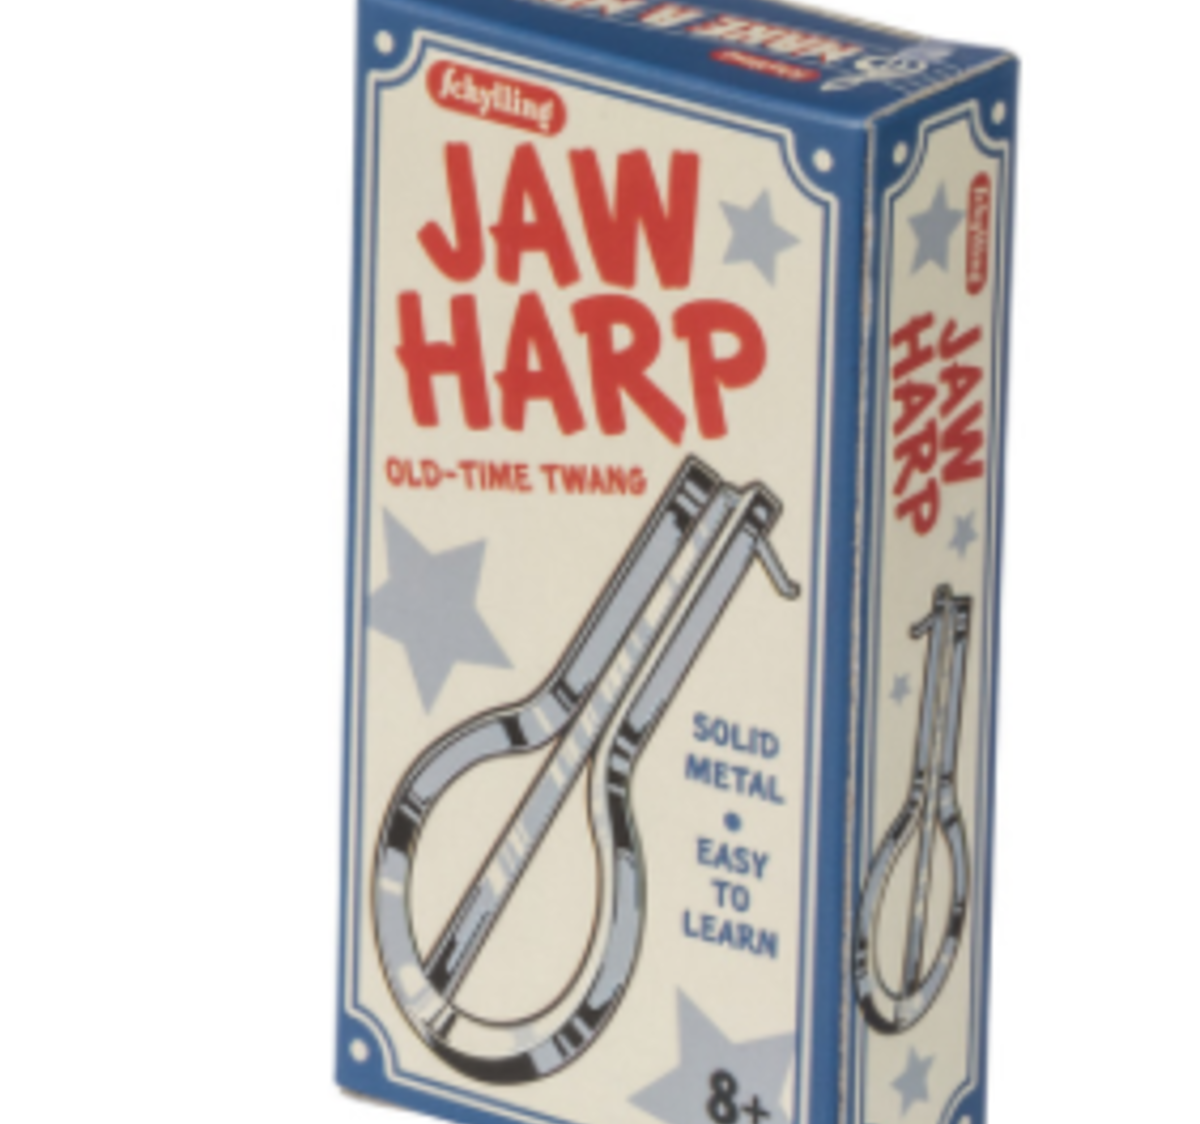 Schylling Jaw Harp